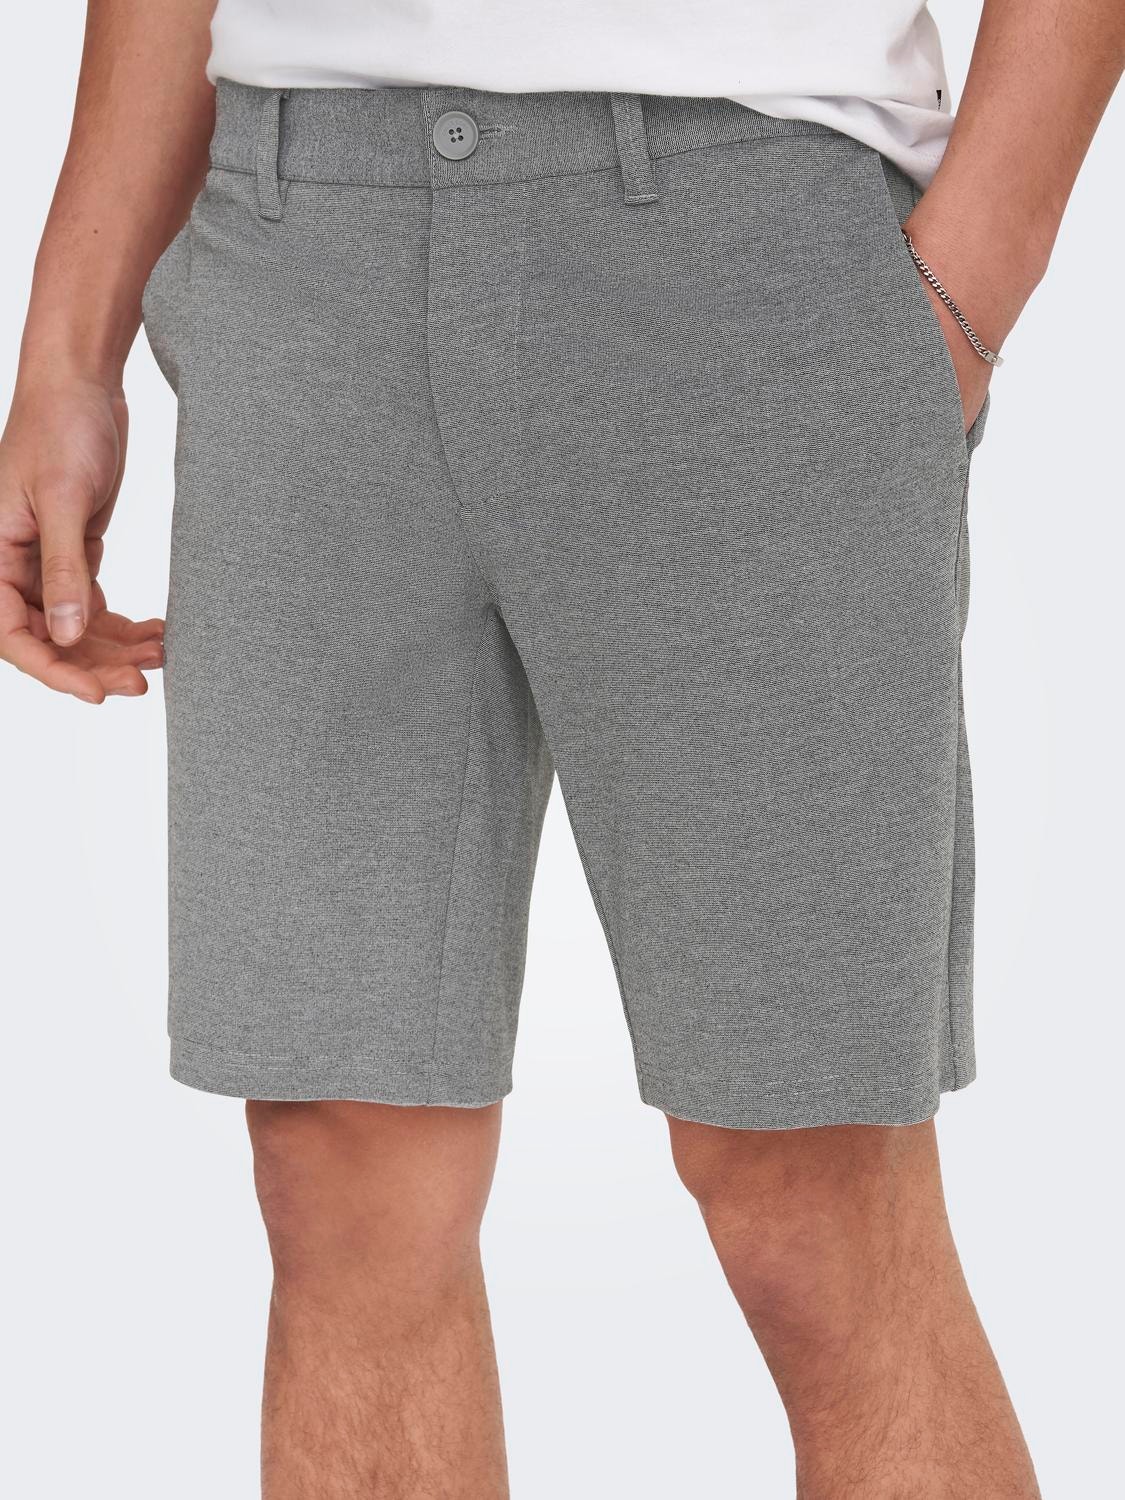 ONLY & SONS Regular Fit Mid waist Shorts -Medium Grey Melange - 22018667